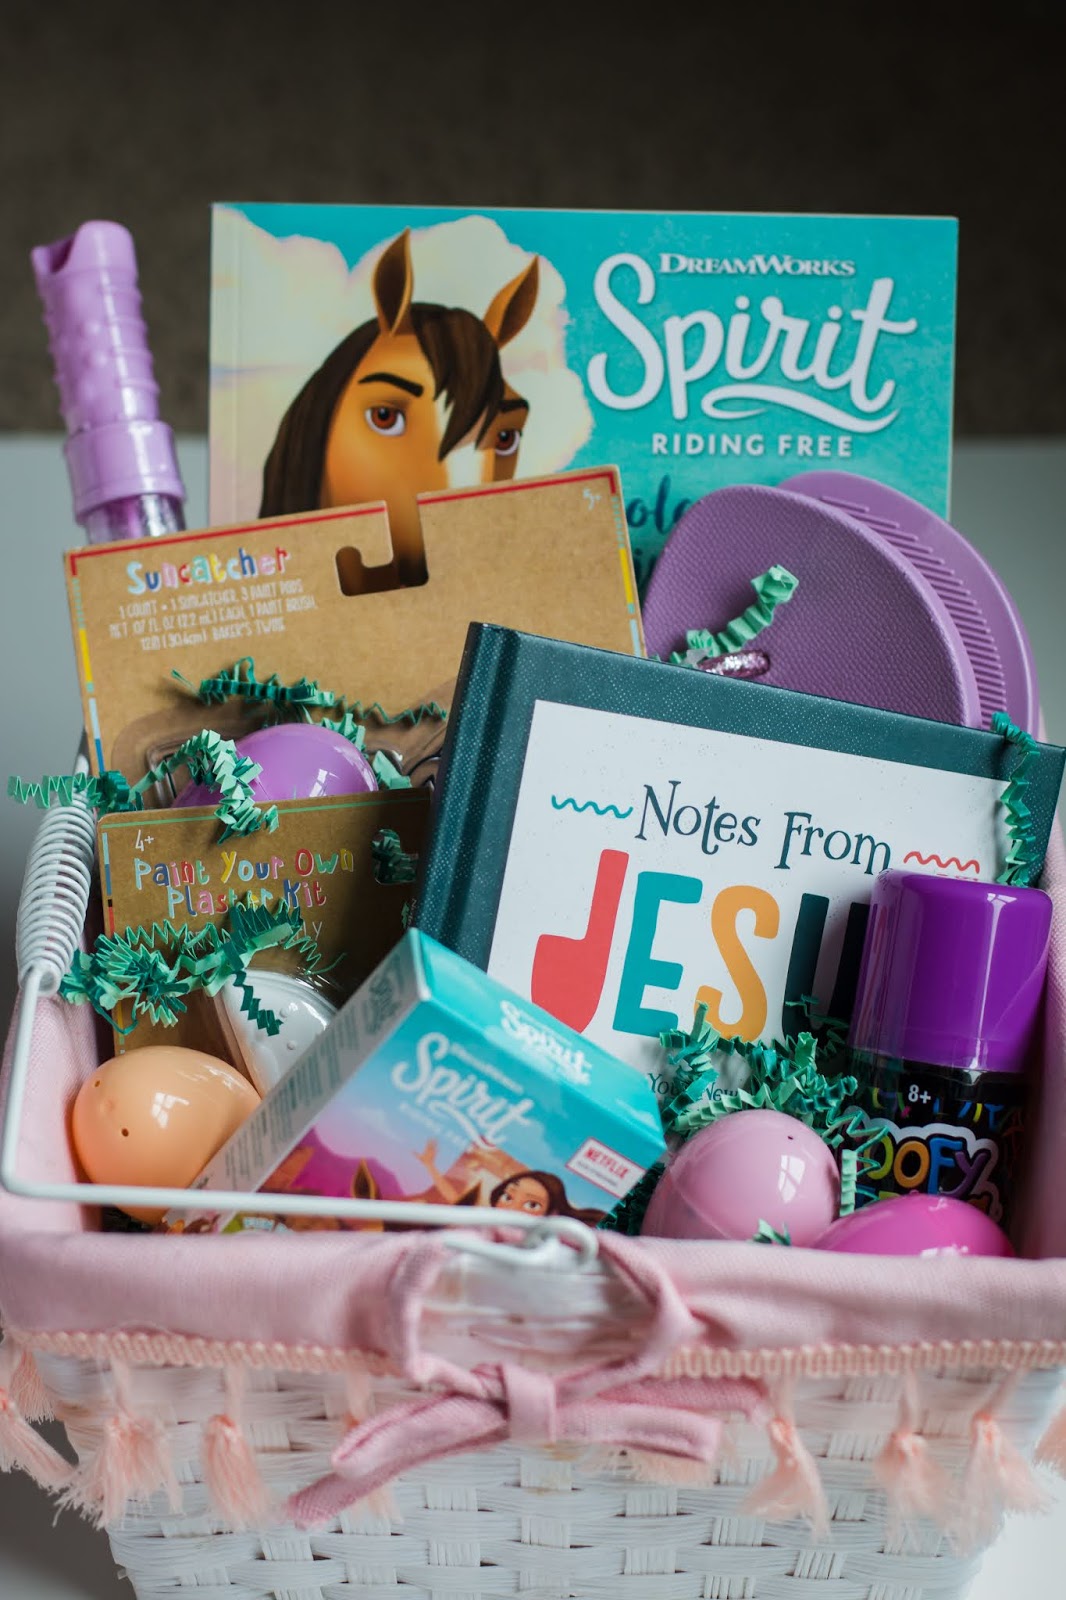 Our Favourite Easter Basket Filler Ideas for Children — Magic +